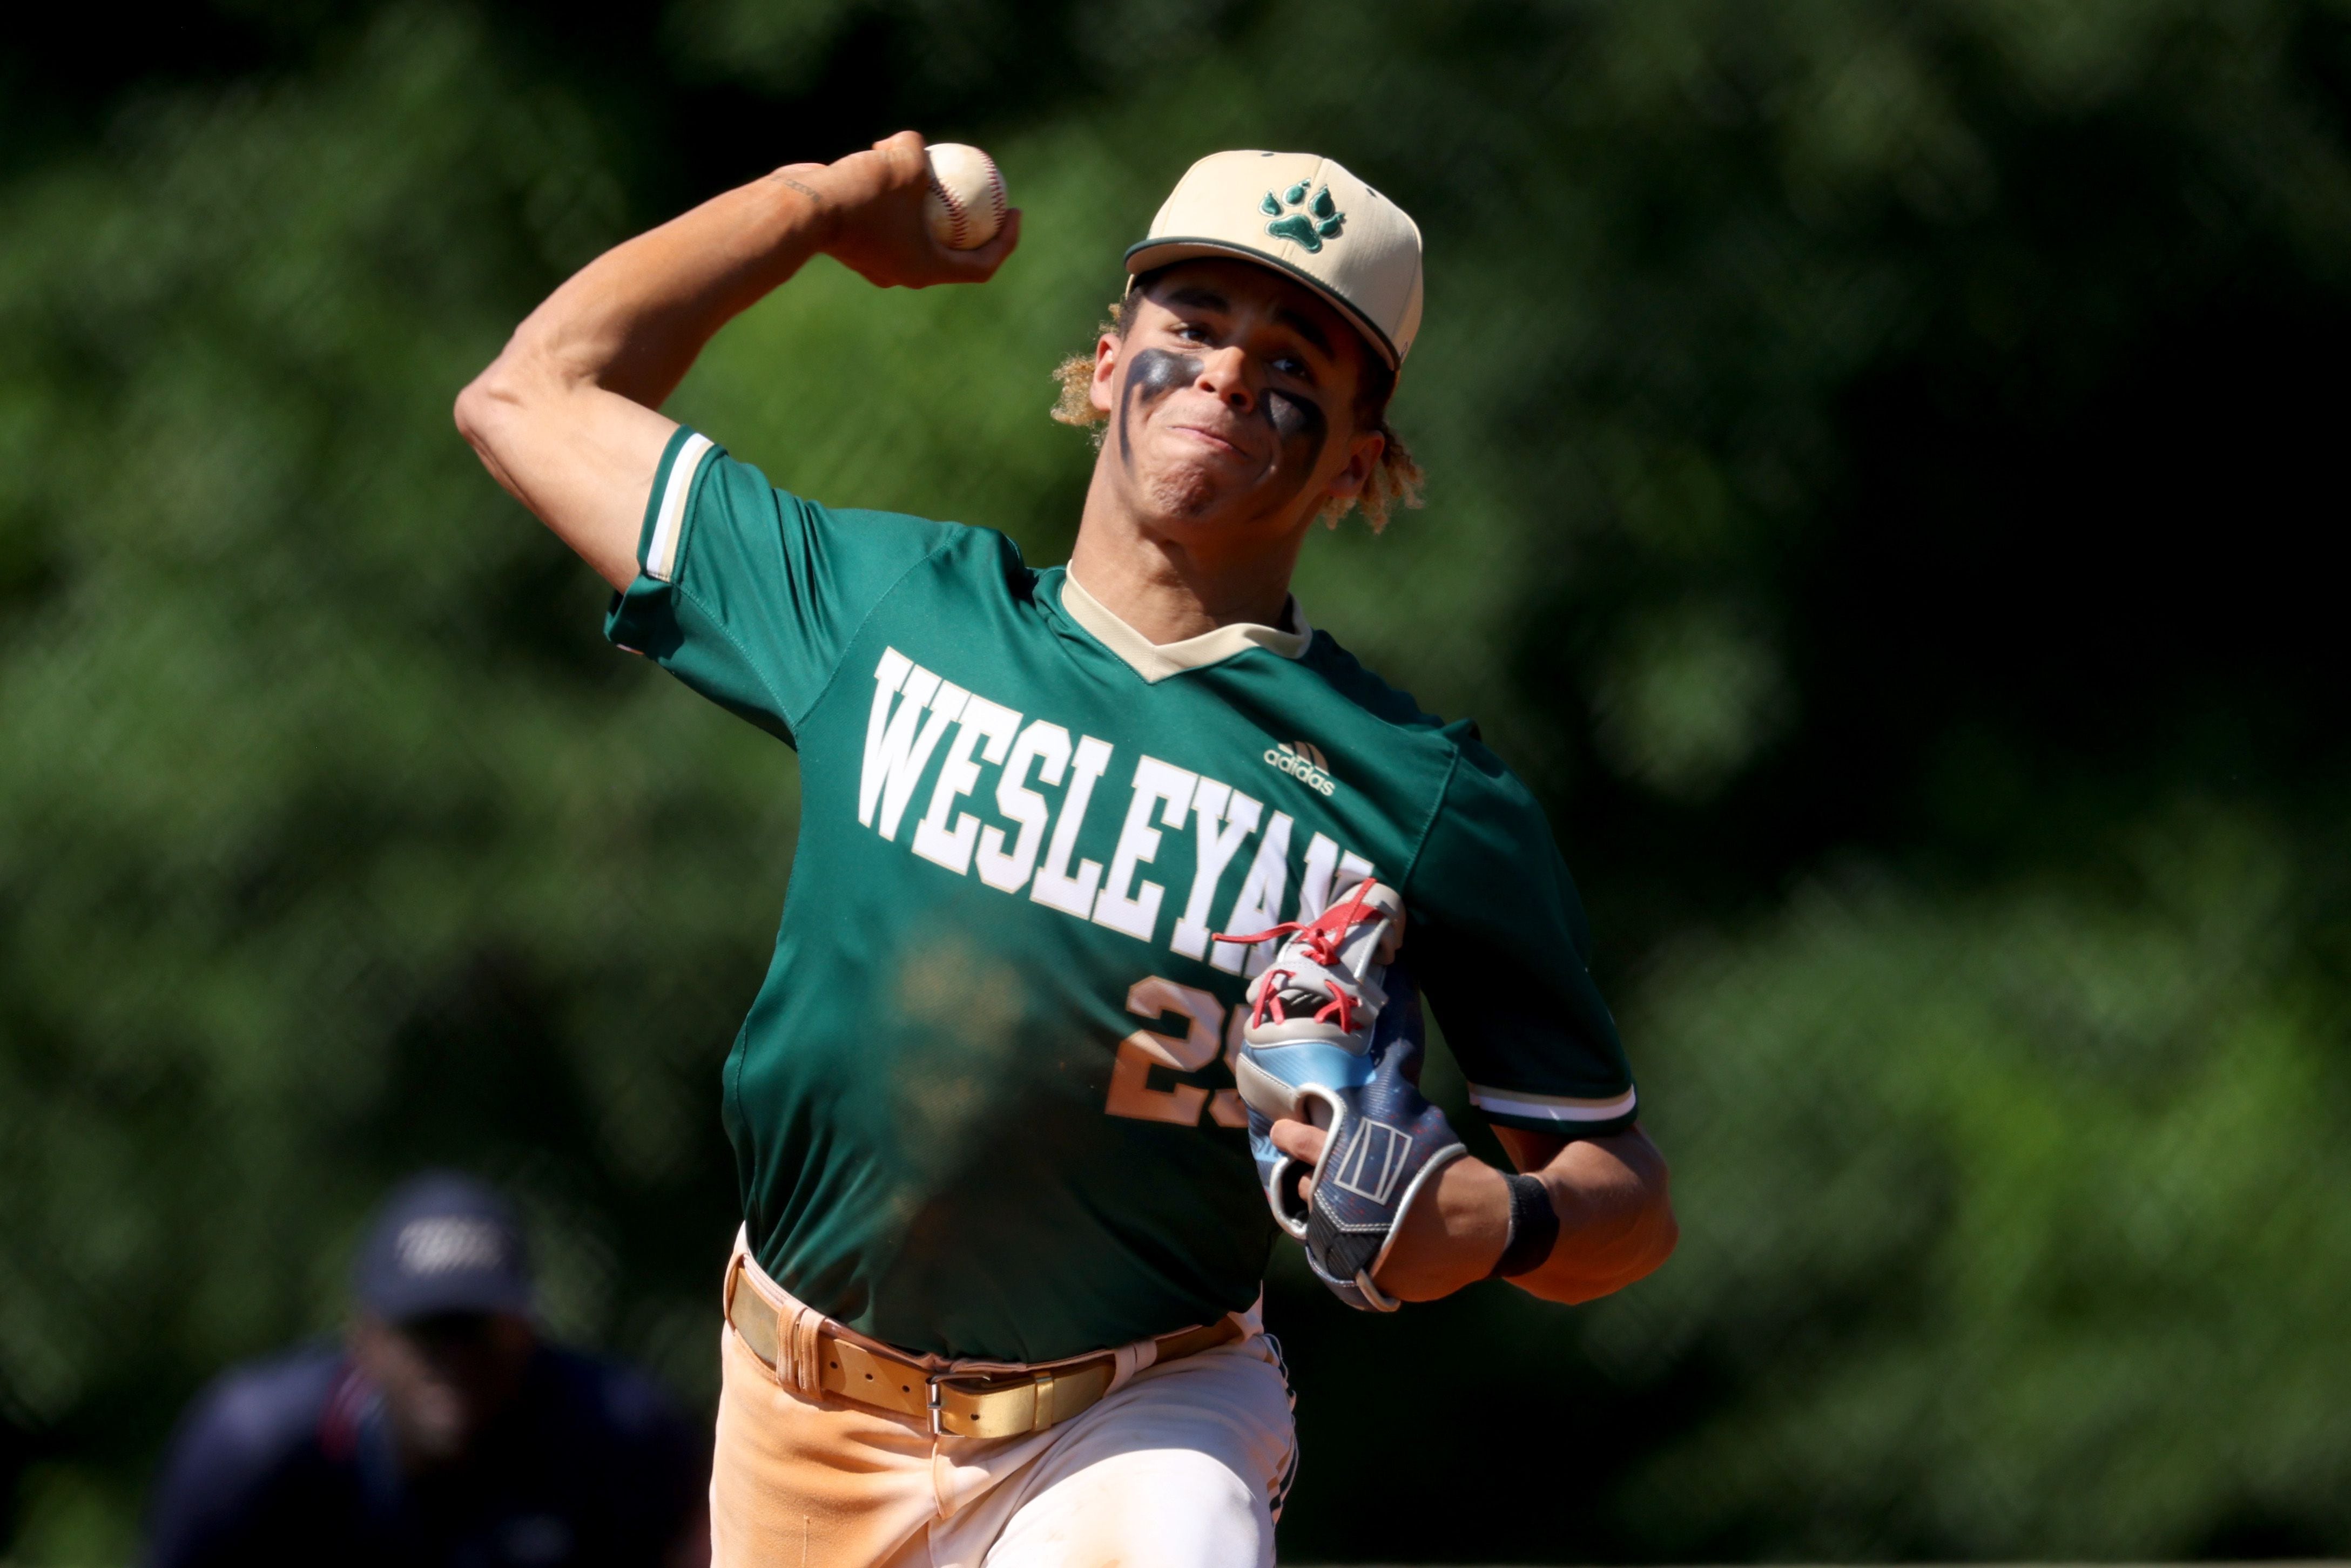 Photos: Sons of Andruw Jones, Jeff Blauser lead Wesleyan baseball team